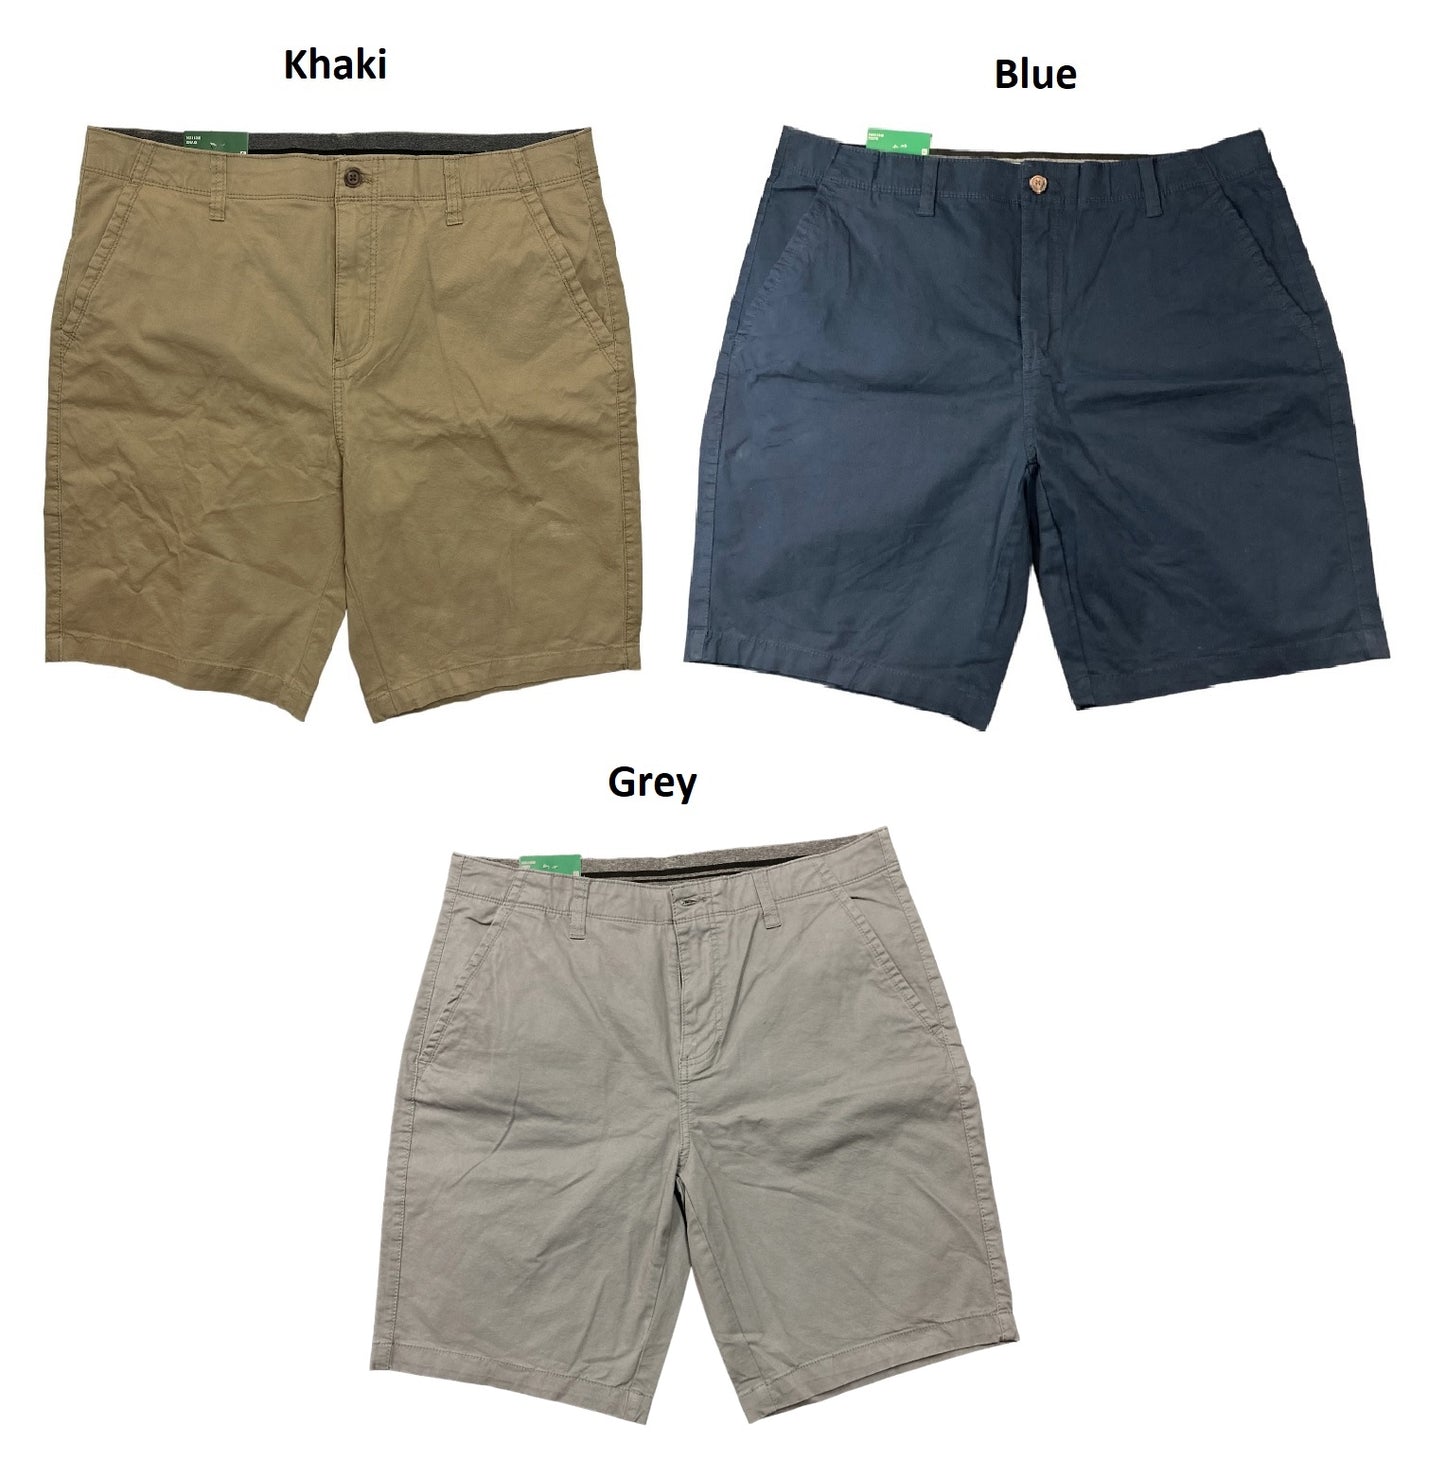 Iron CO. Men's Flat Front Comfort Flex Waistband 10" Inseam Twill Shorts